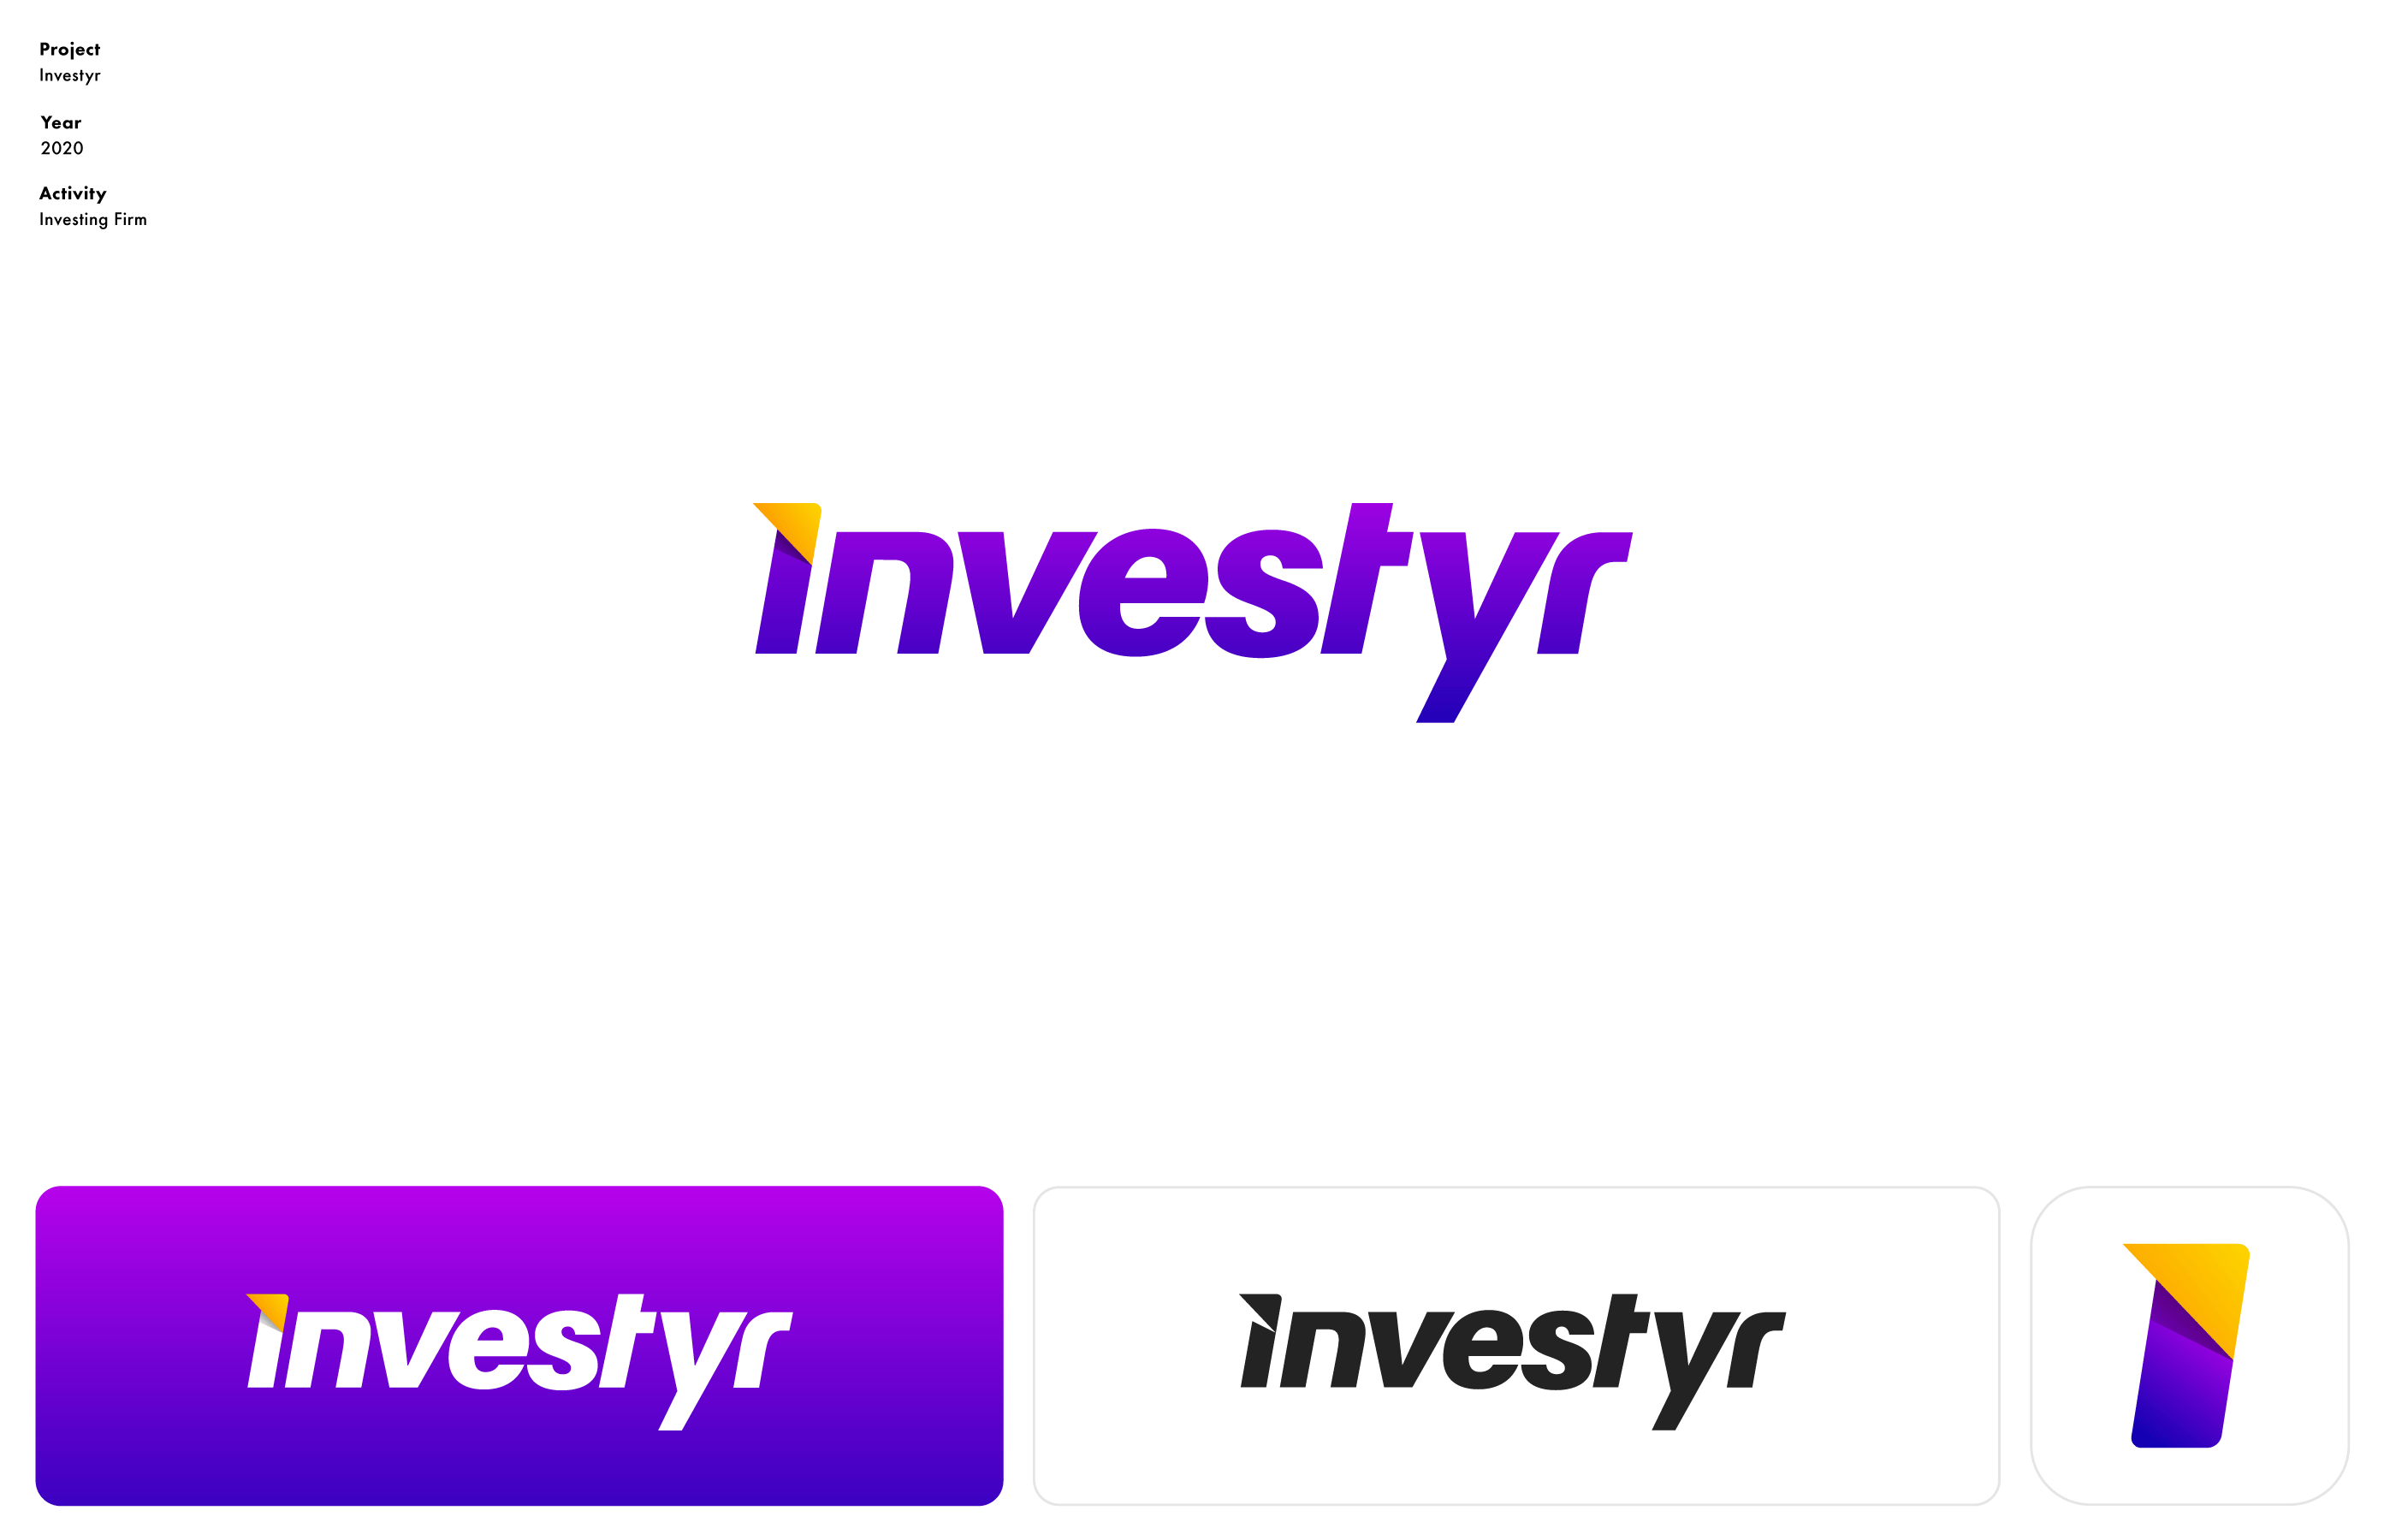 wordmark logotype for investyr investing platform from france by mihai dolganiuc design